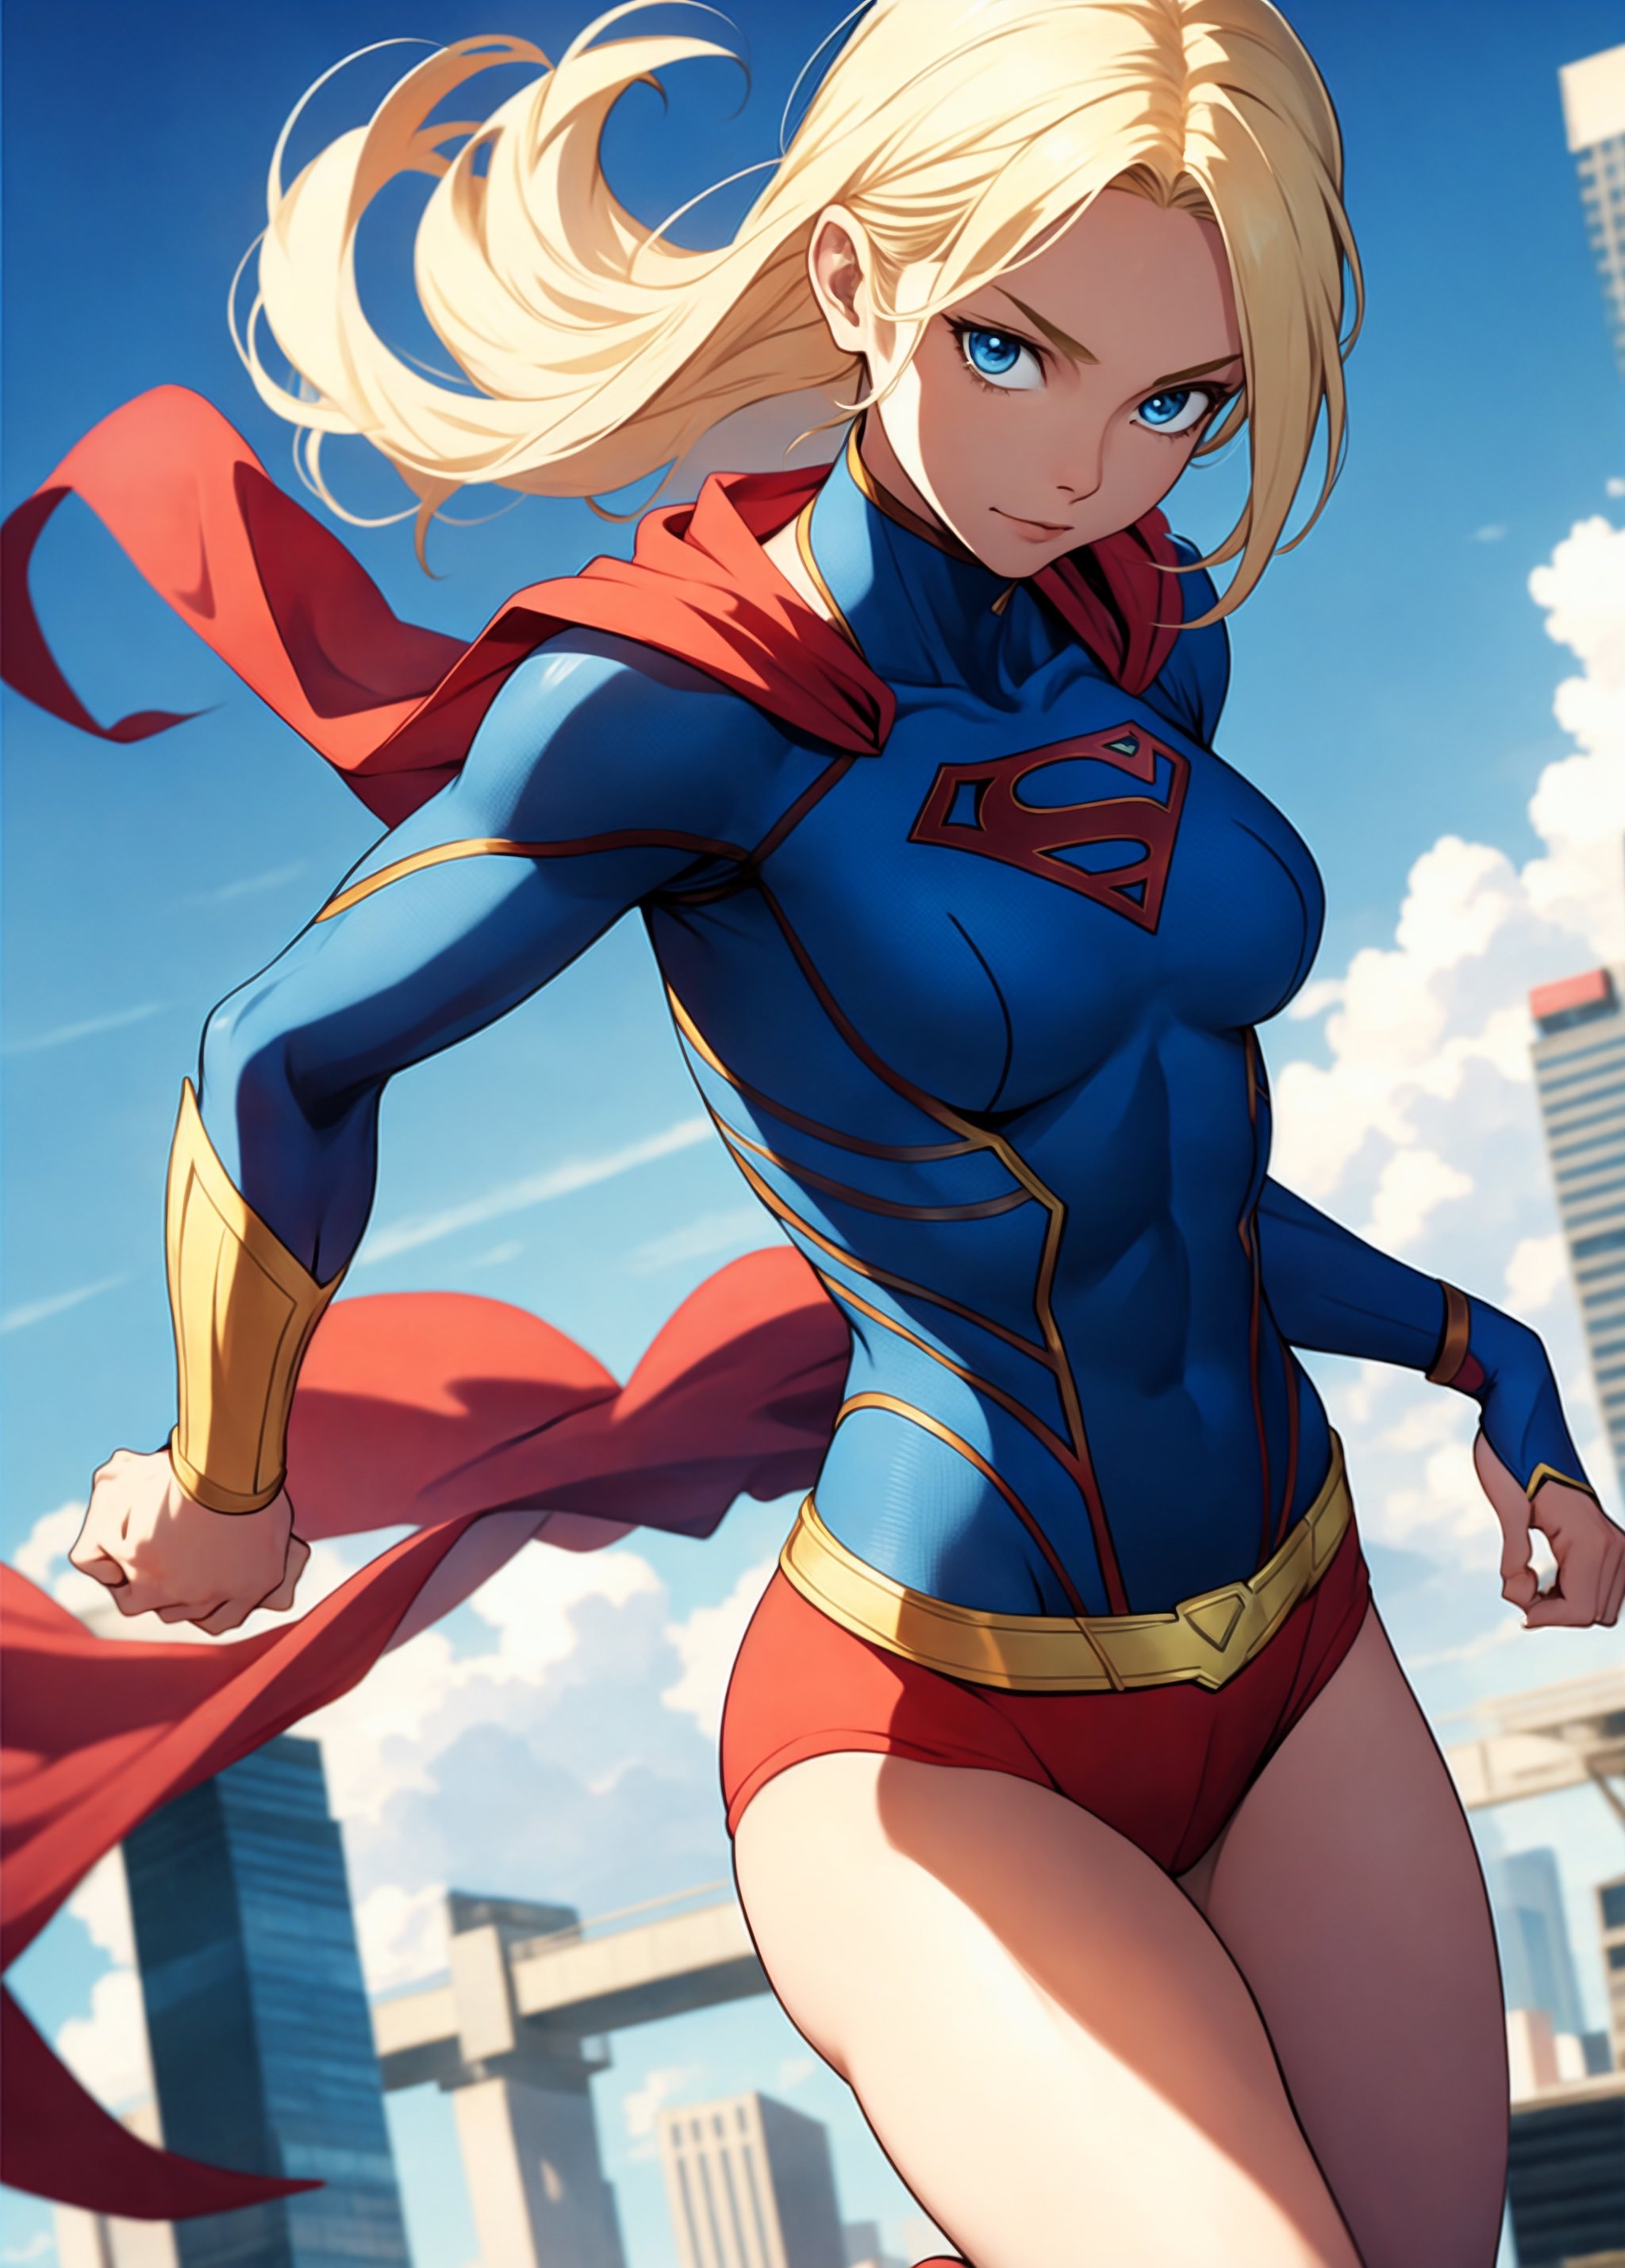 supergirl, woman, blonde hair, blue eyes, athletic figure, toned body, superhero pose, (masterpiece, best quality:1.1), ghibli style